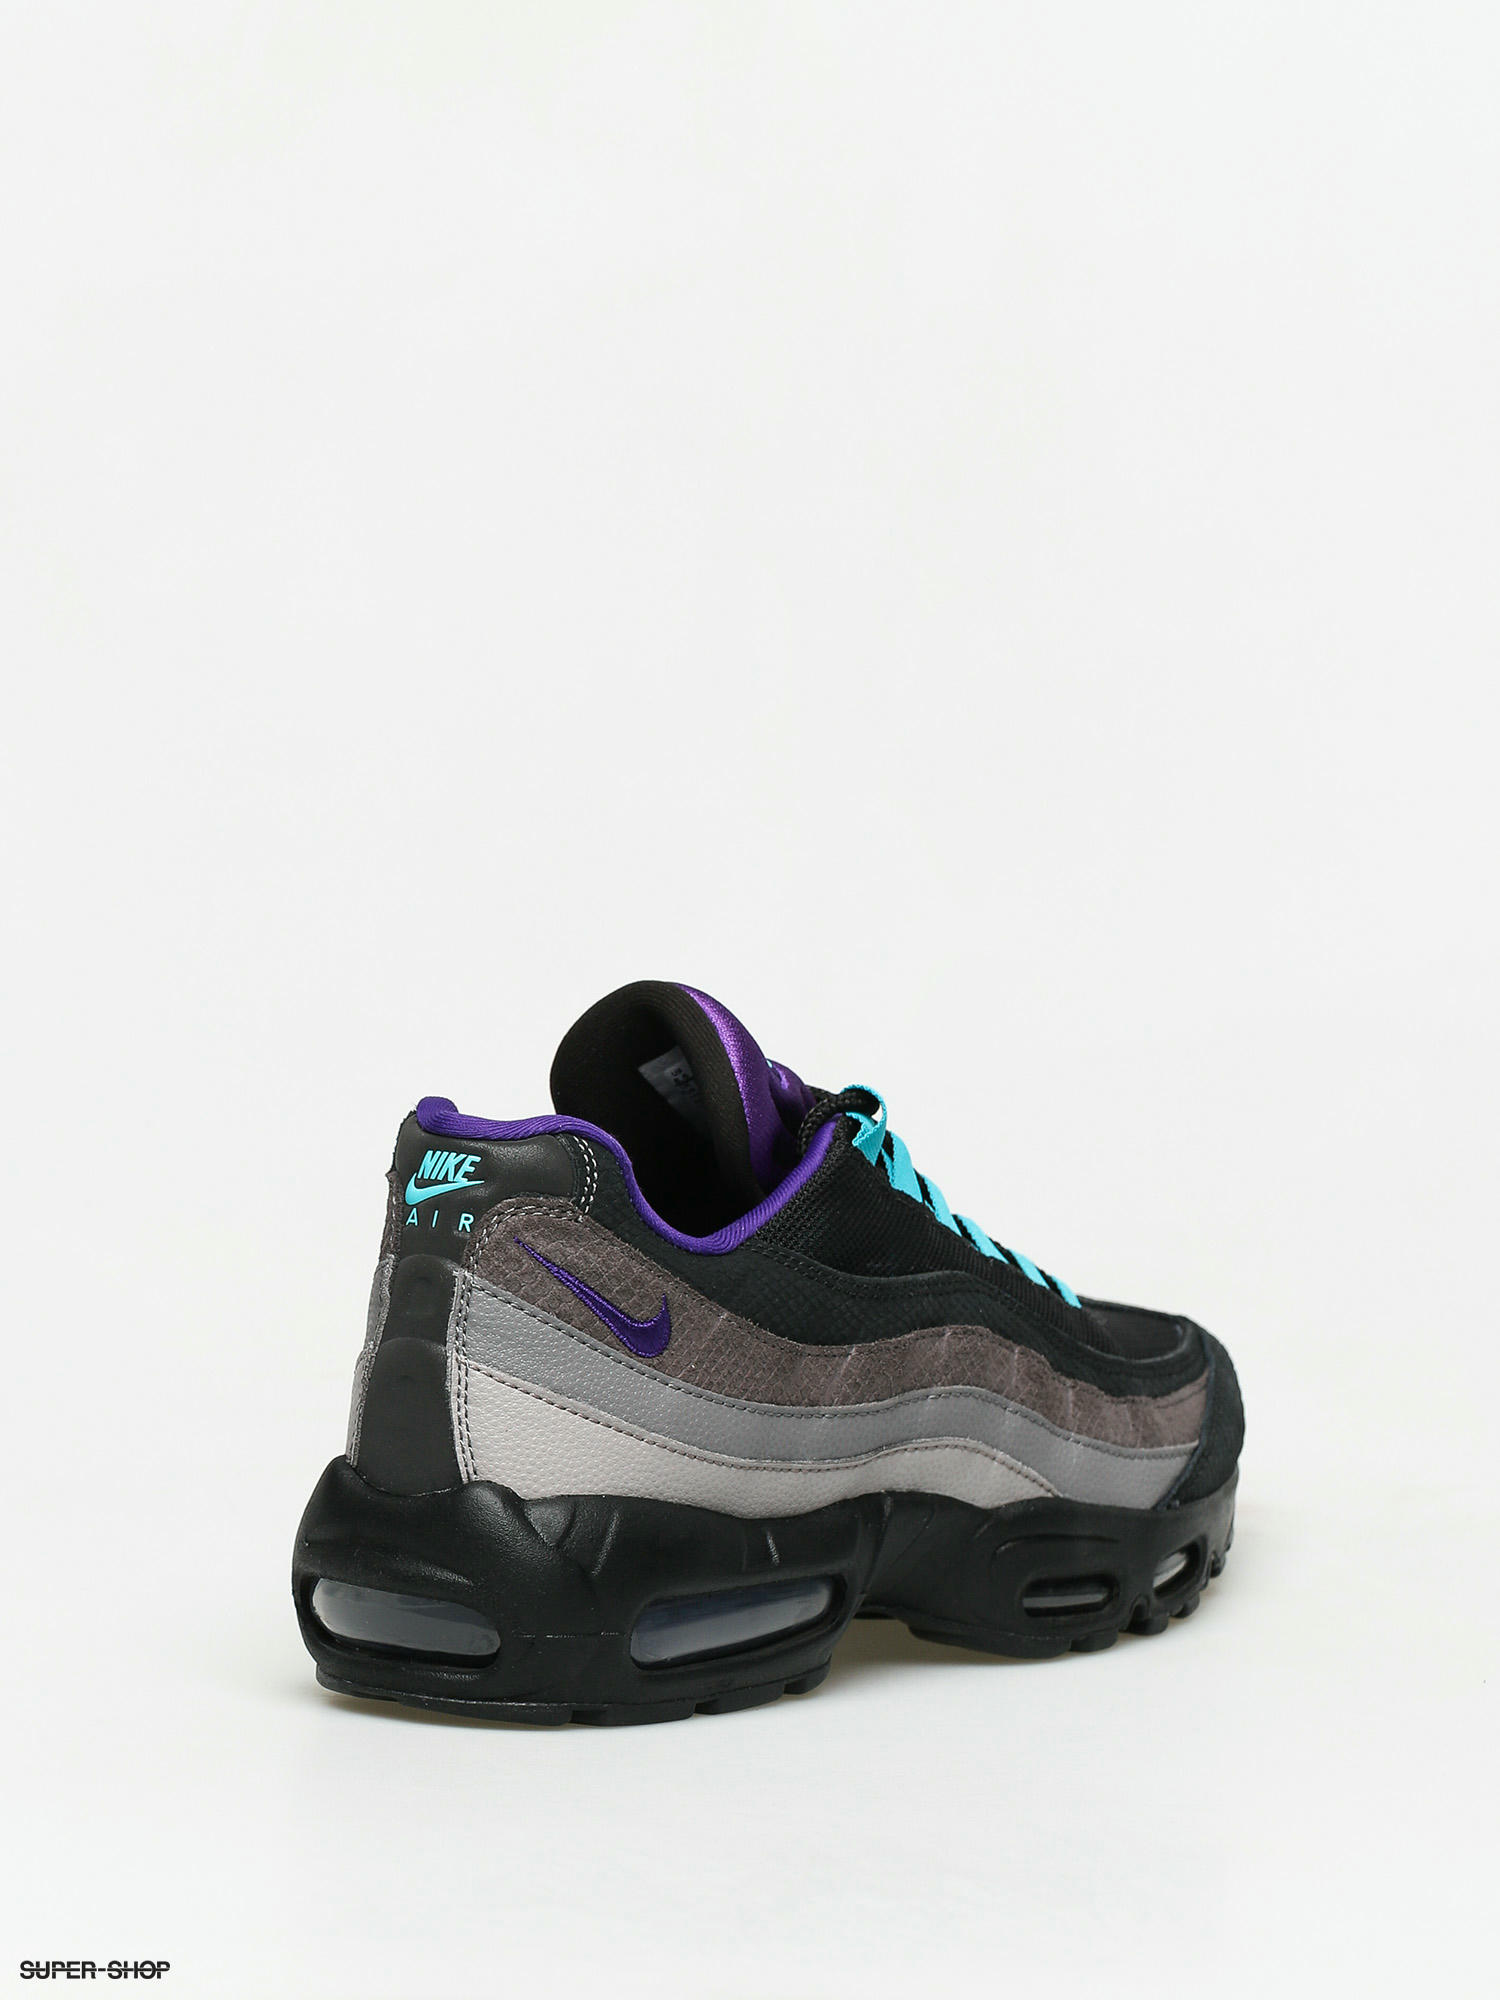 Nike Shoes Air Max 95 Lv8 (black/court purple teal nebula)